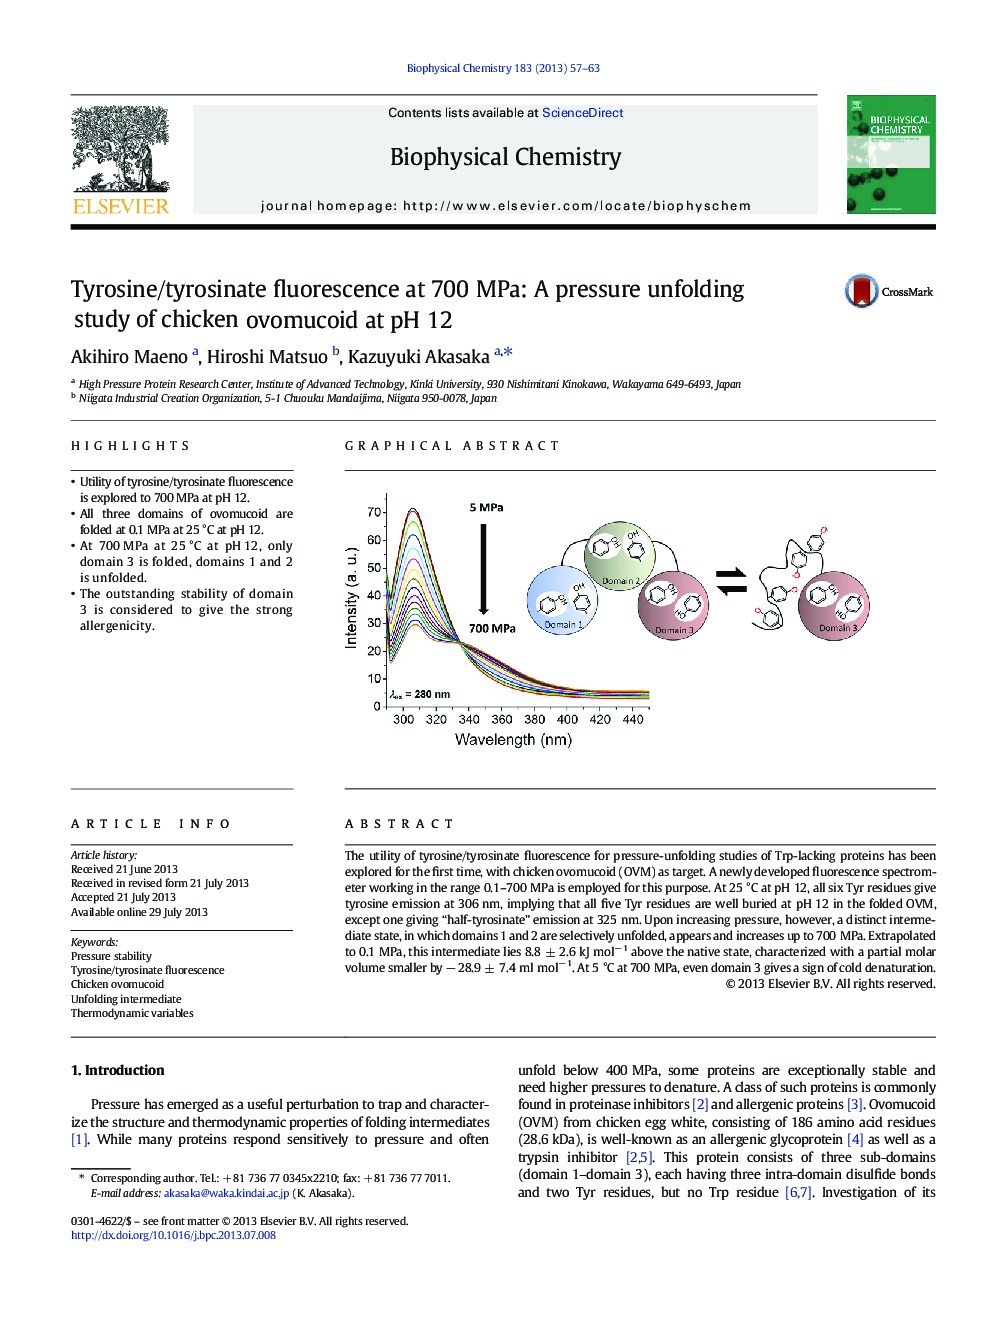 Tyrosine/tyrosinate fluorescence at 700Â MPa: A pressure unfolding study of chicken ovomucoid at pHÂ 12